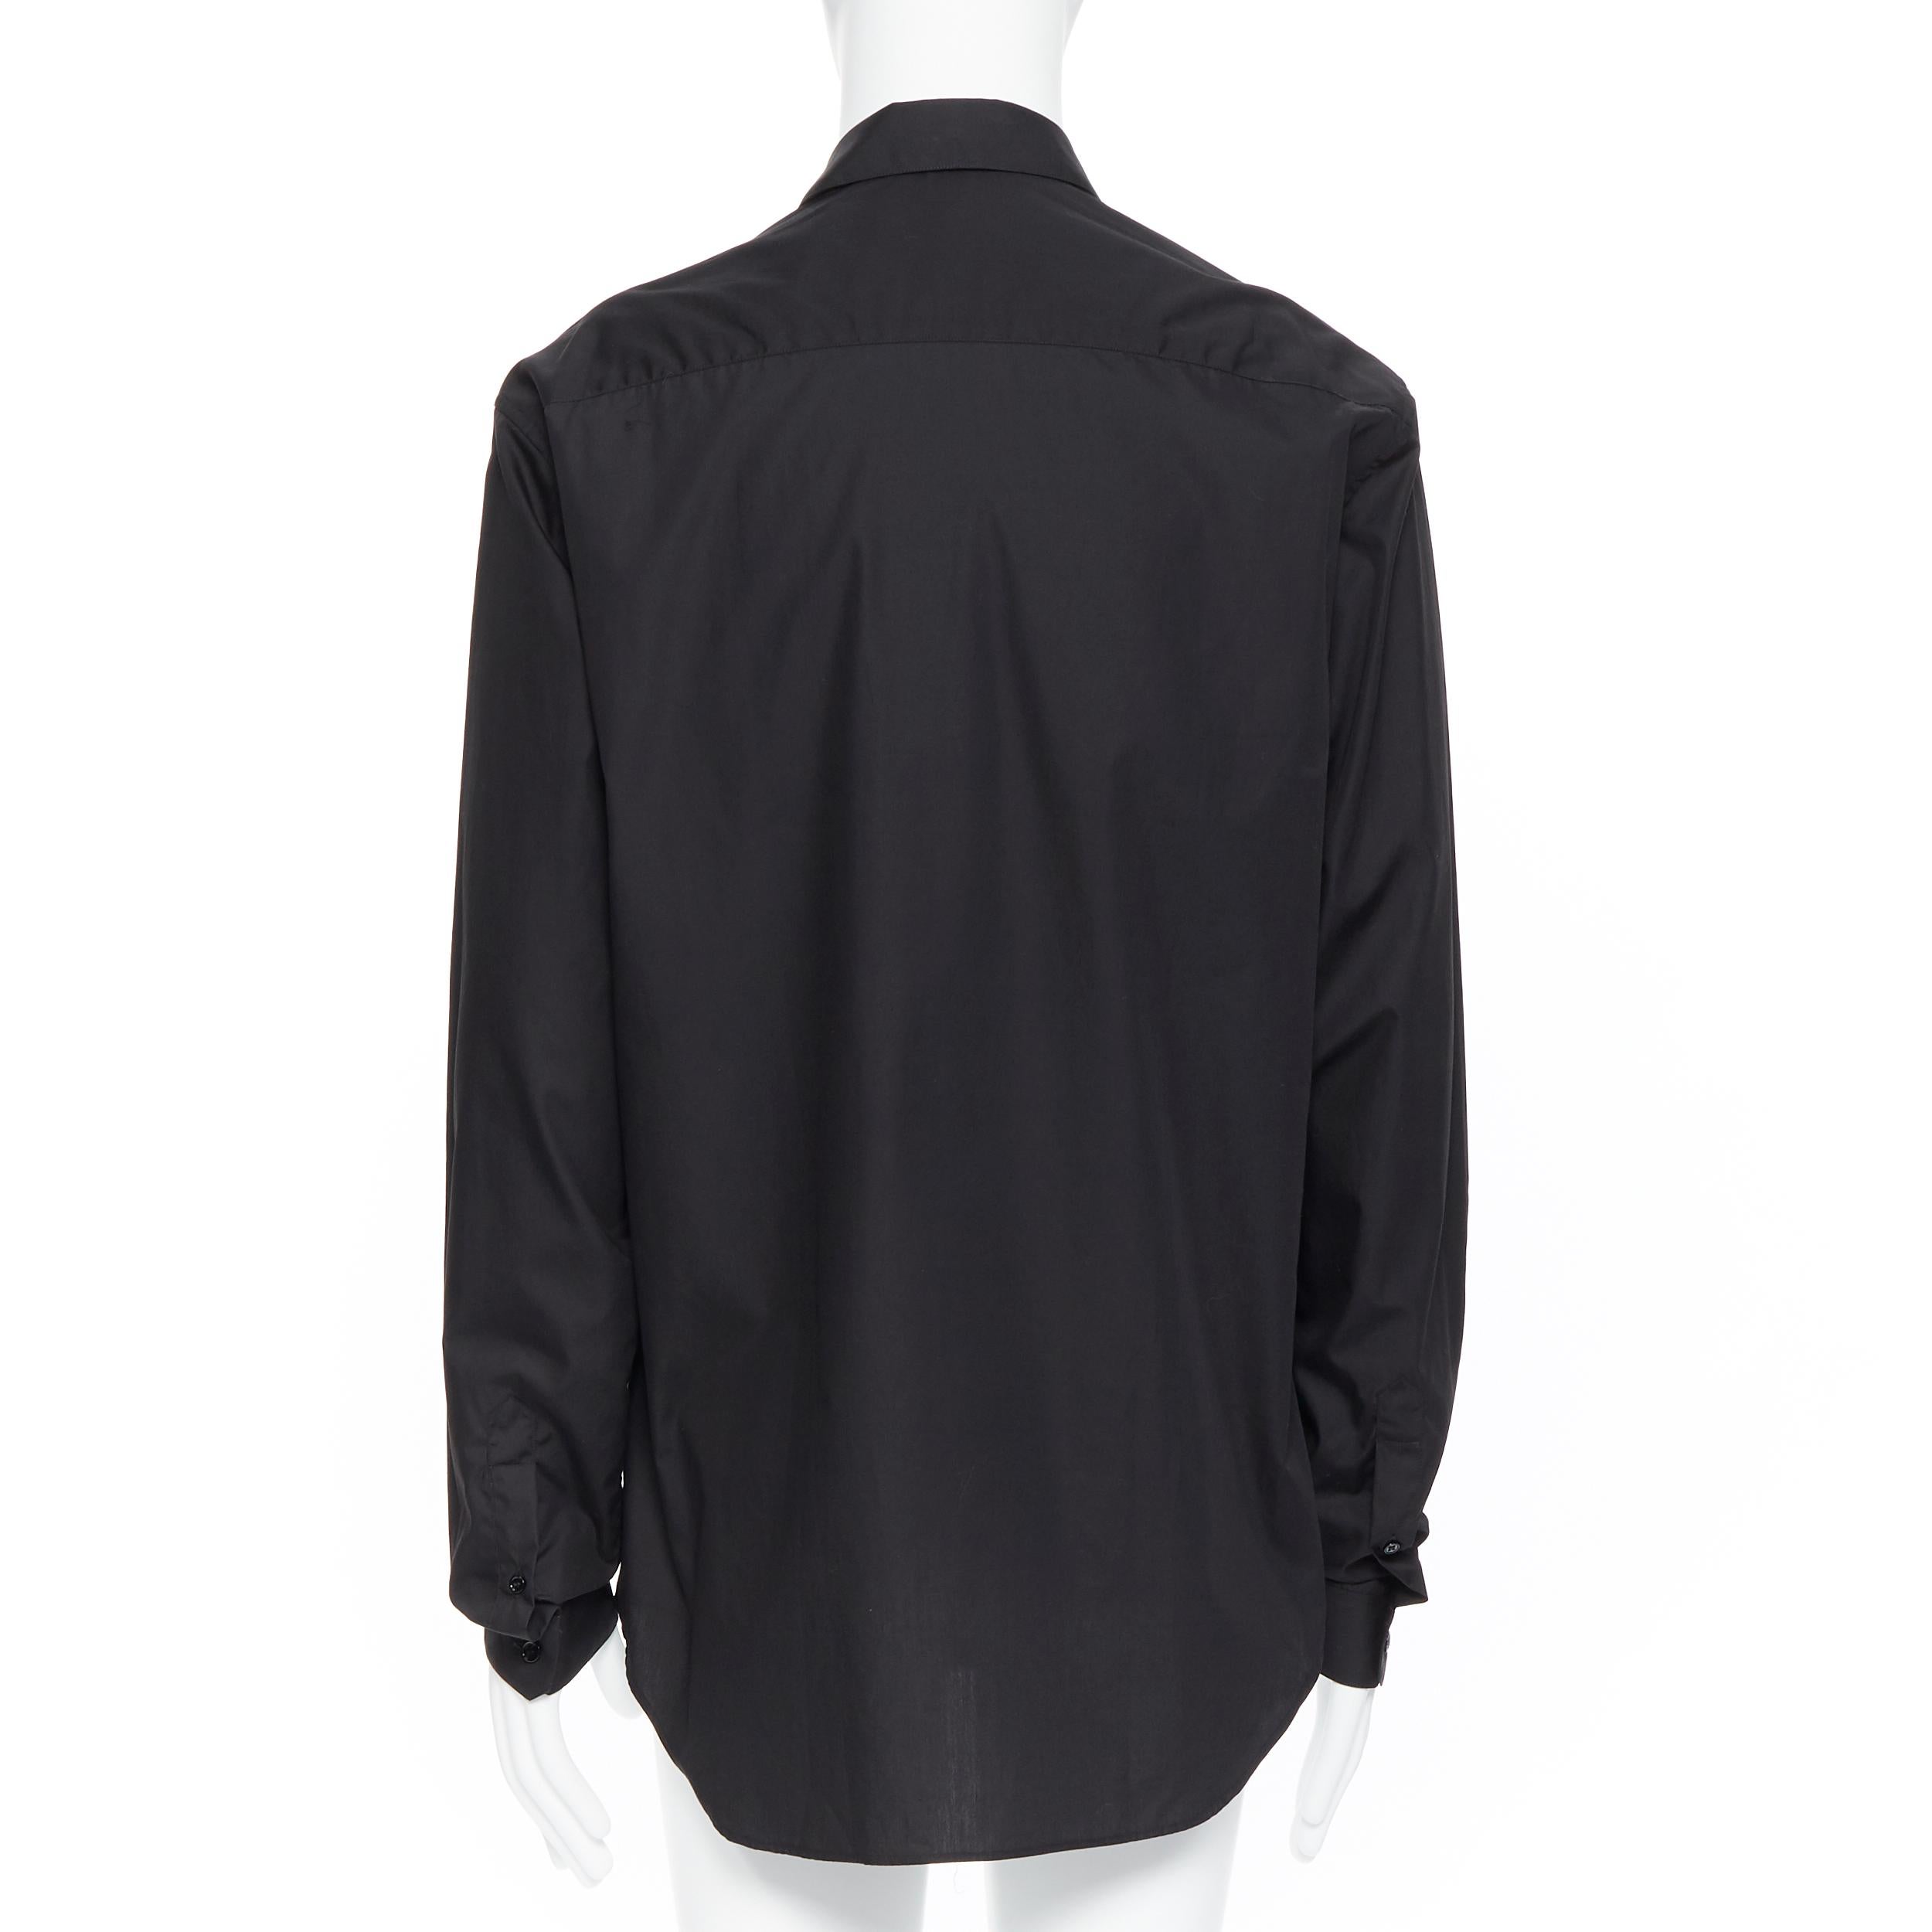 Men's new VERSACE 2019 black cotton gold Medusa embroidery long sleeve shirt EU44 XXXL